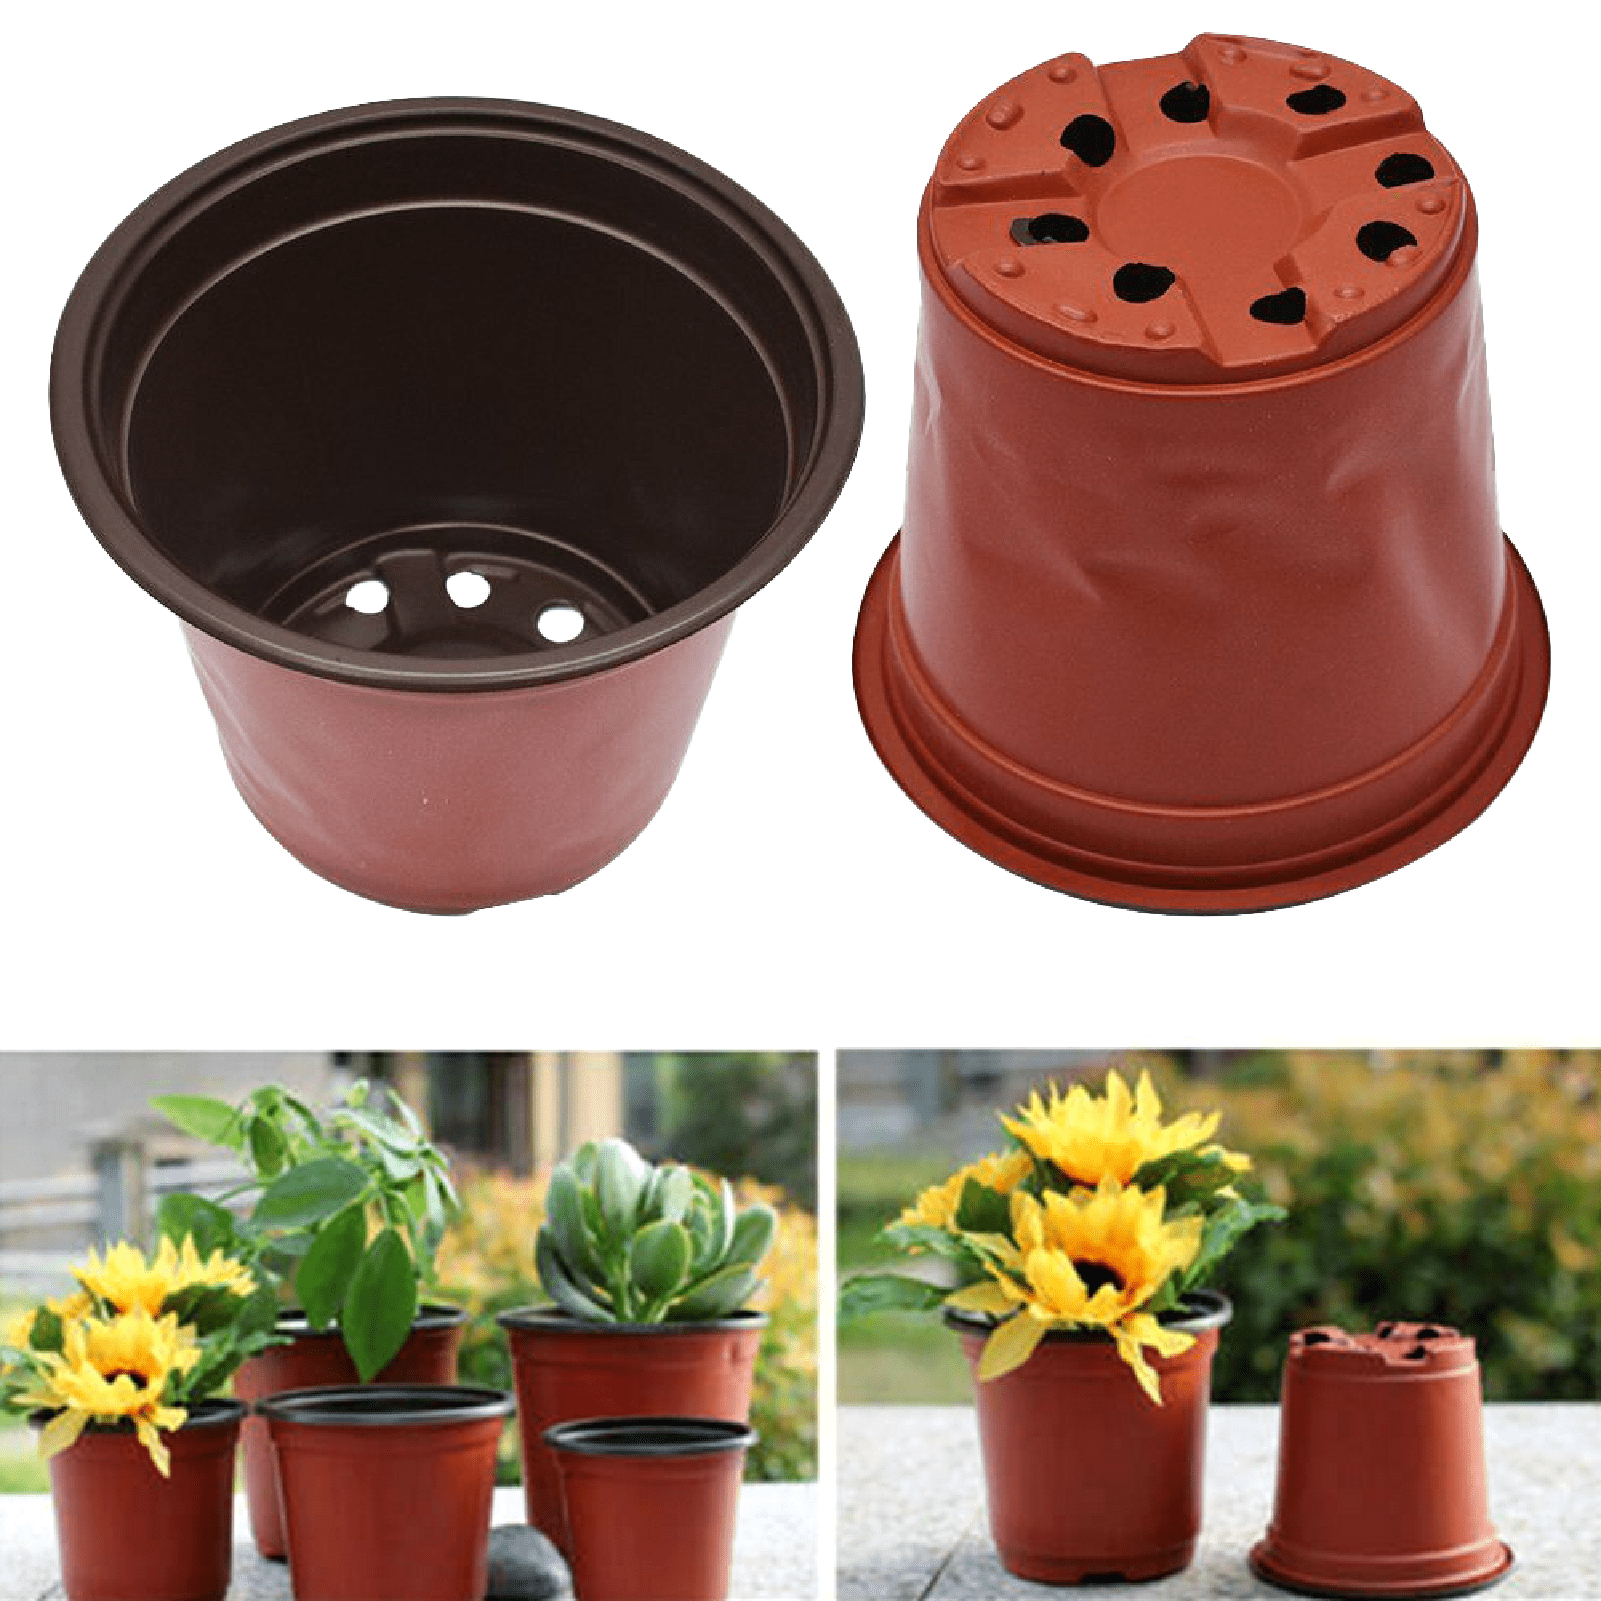 Details about   2 Pack Plant Pot Garden Round Flower Planter Plastic Pots With Saucer Tray Decor 